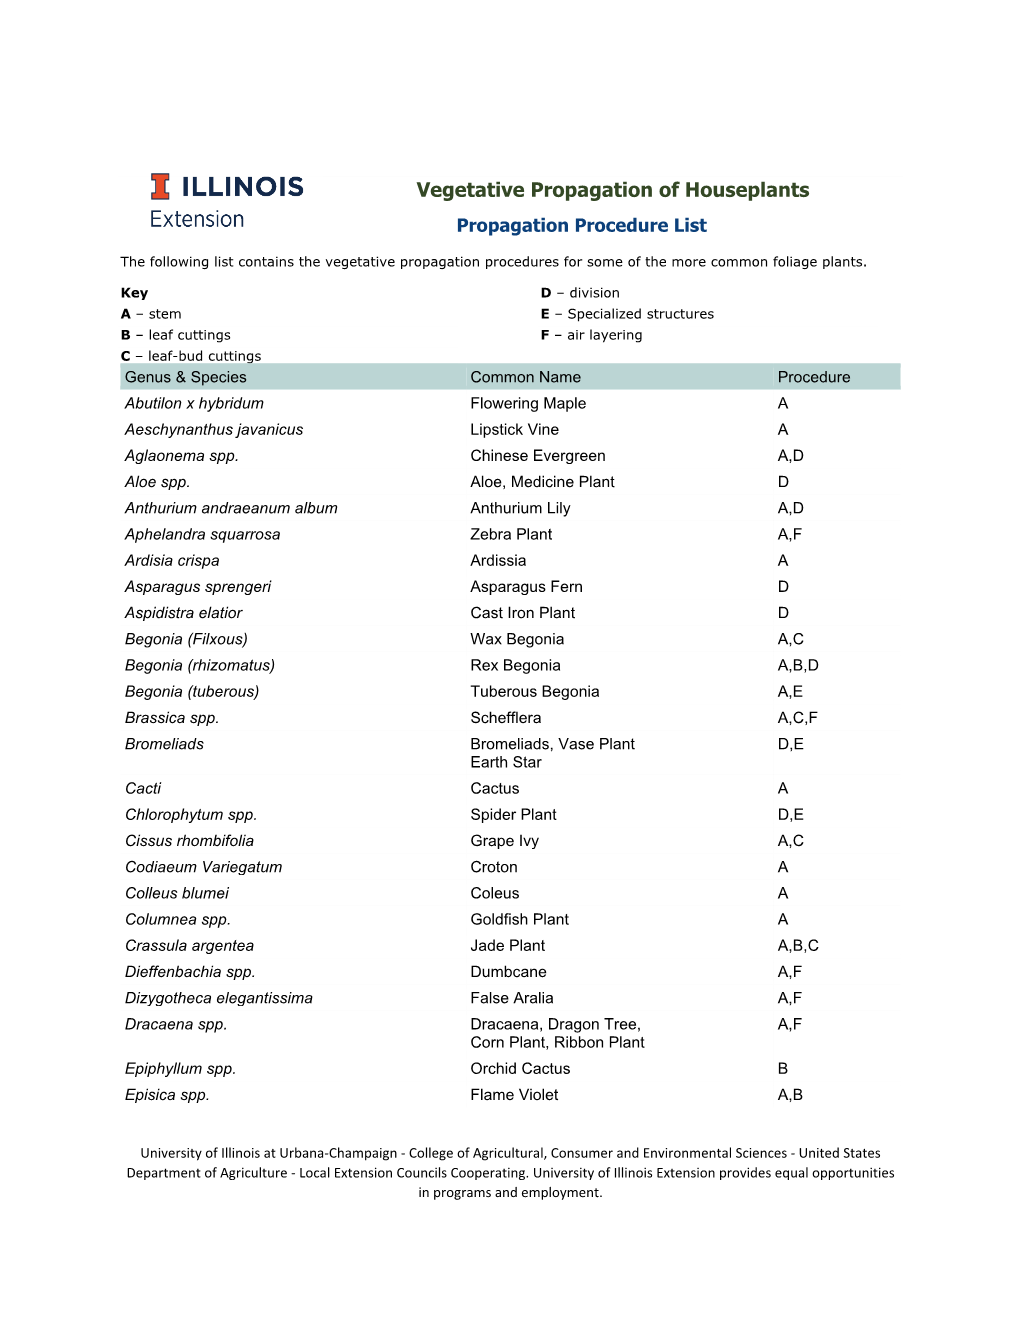 Vegetative Propagation of Houseplants Propagation Procedure List